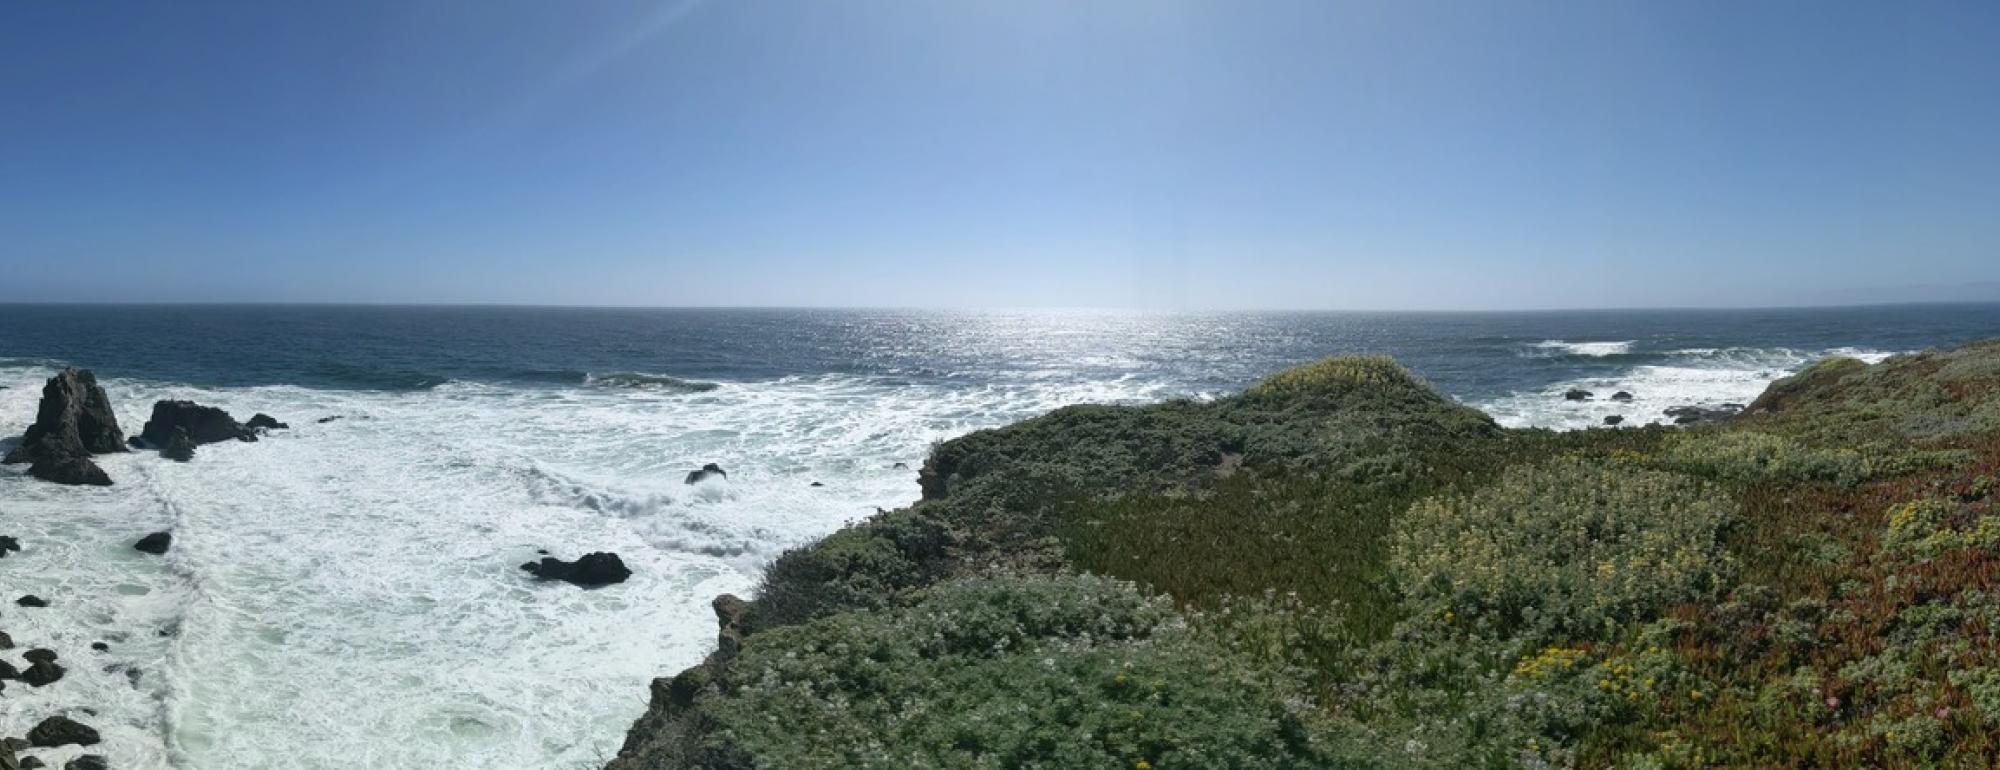 California coast line